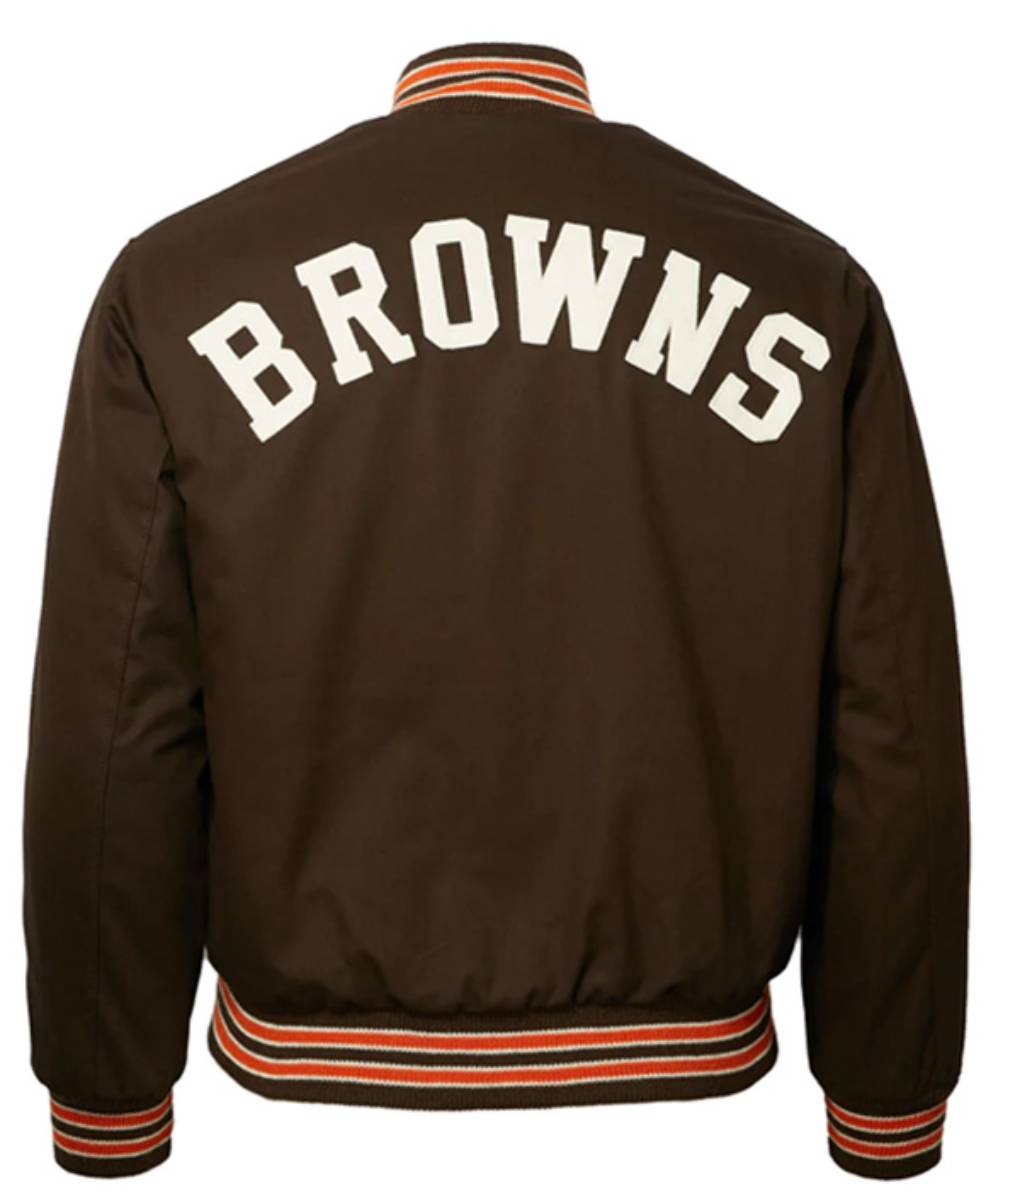 Browns Bomber Jacket (1)